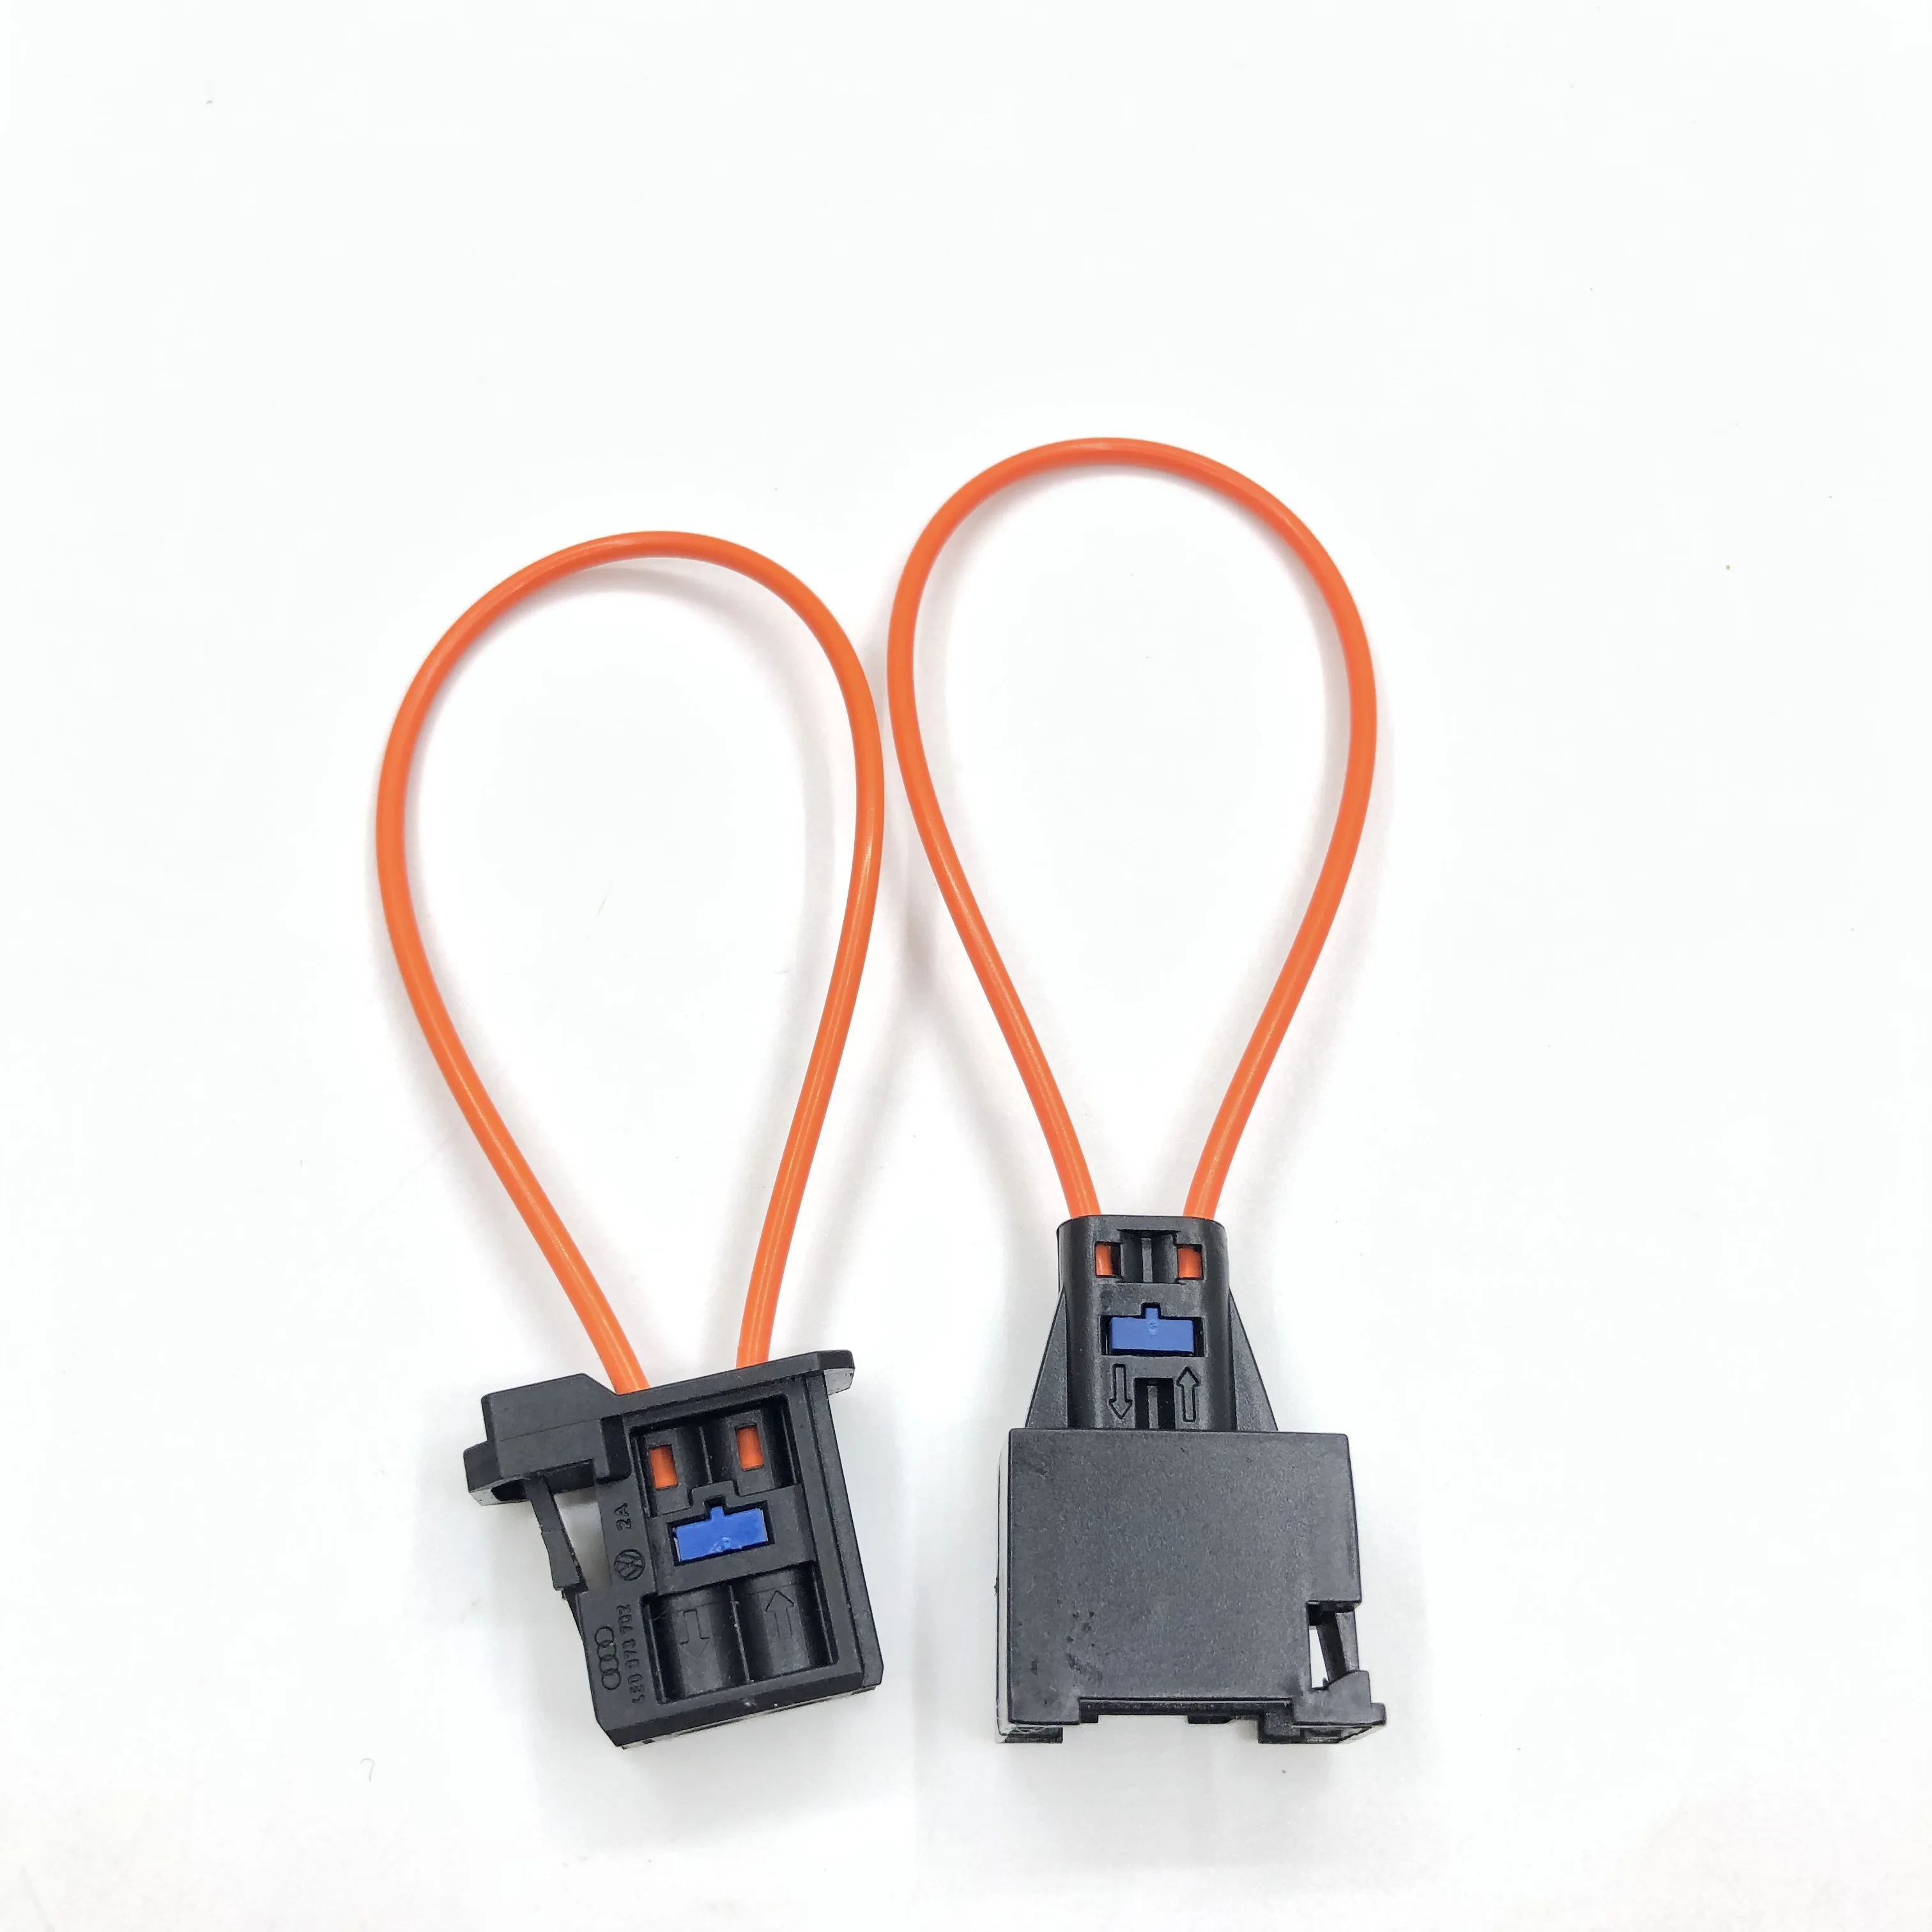 MOST Optical Optic Fiber Loop Connector Diagnostic Tool Cable Sockets Adapter For VW Polo Golf Audi A4 A6 BMW F30 F18